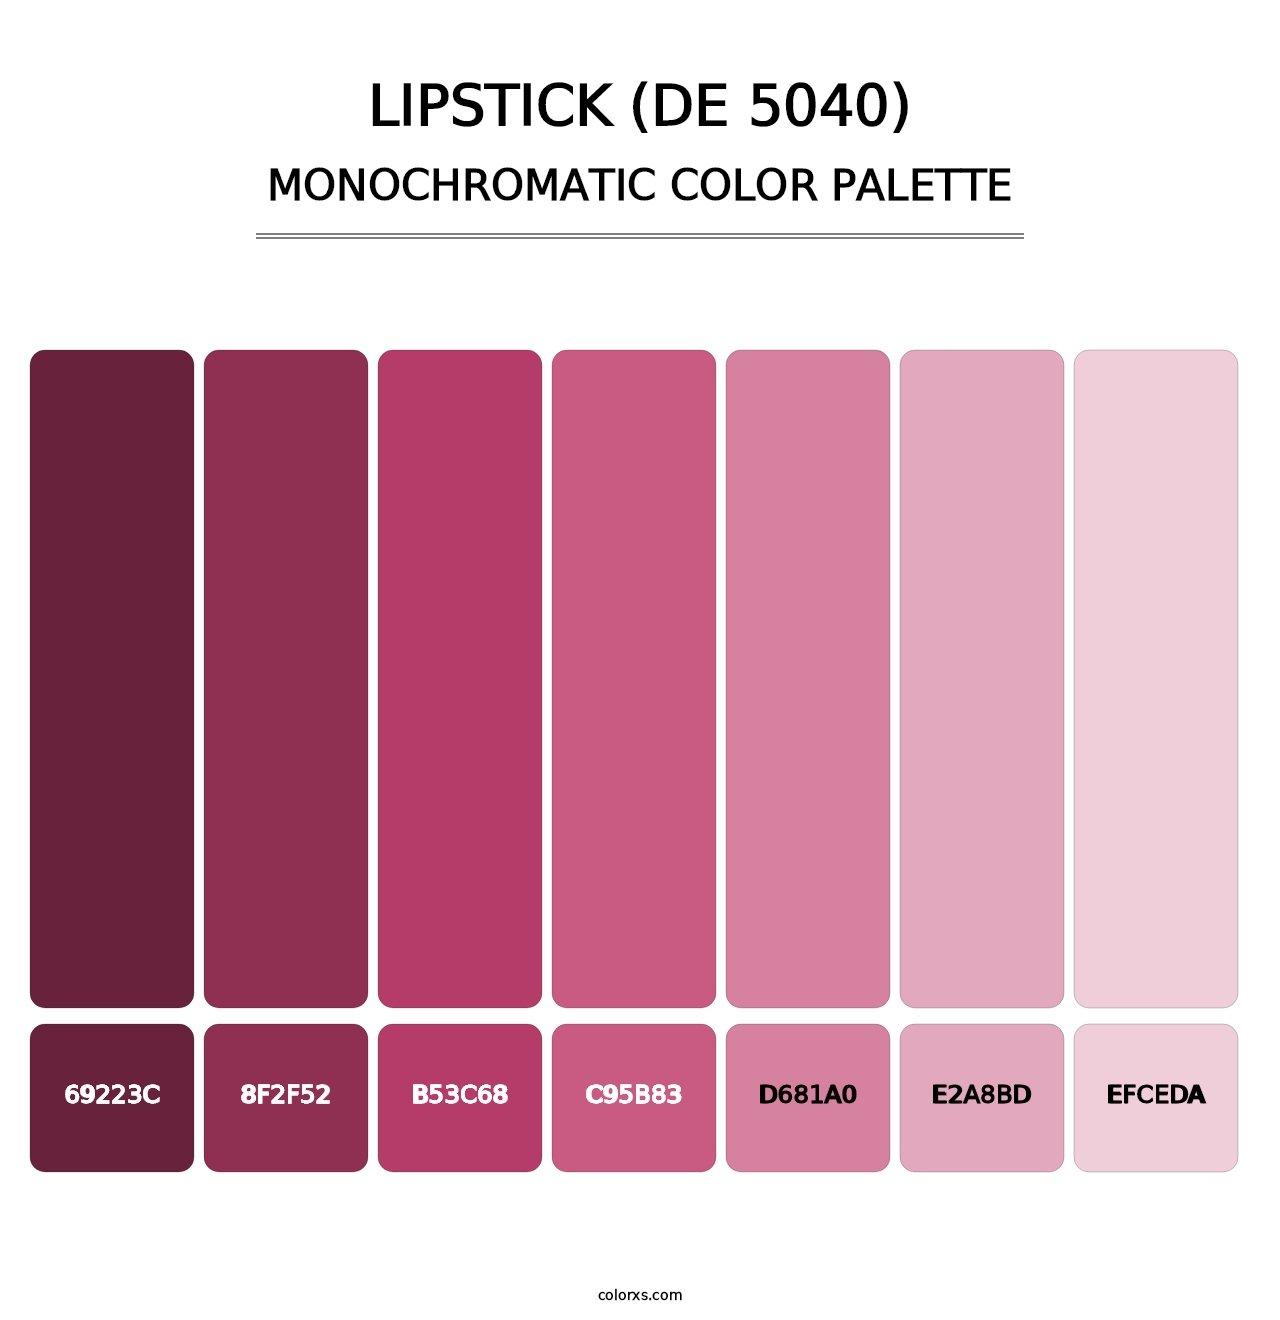 Lipstick (DE 5040) - Monochromatic Color Palette